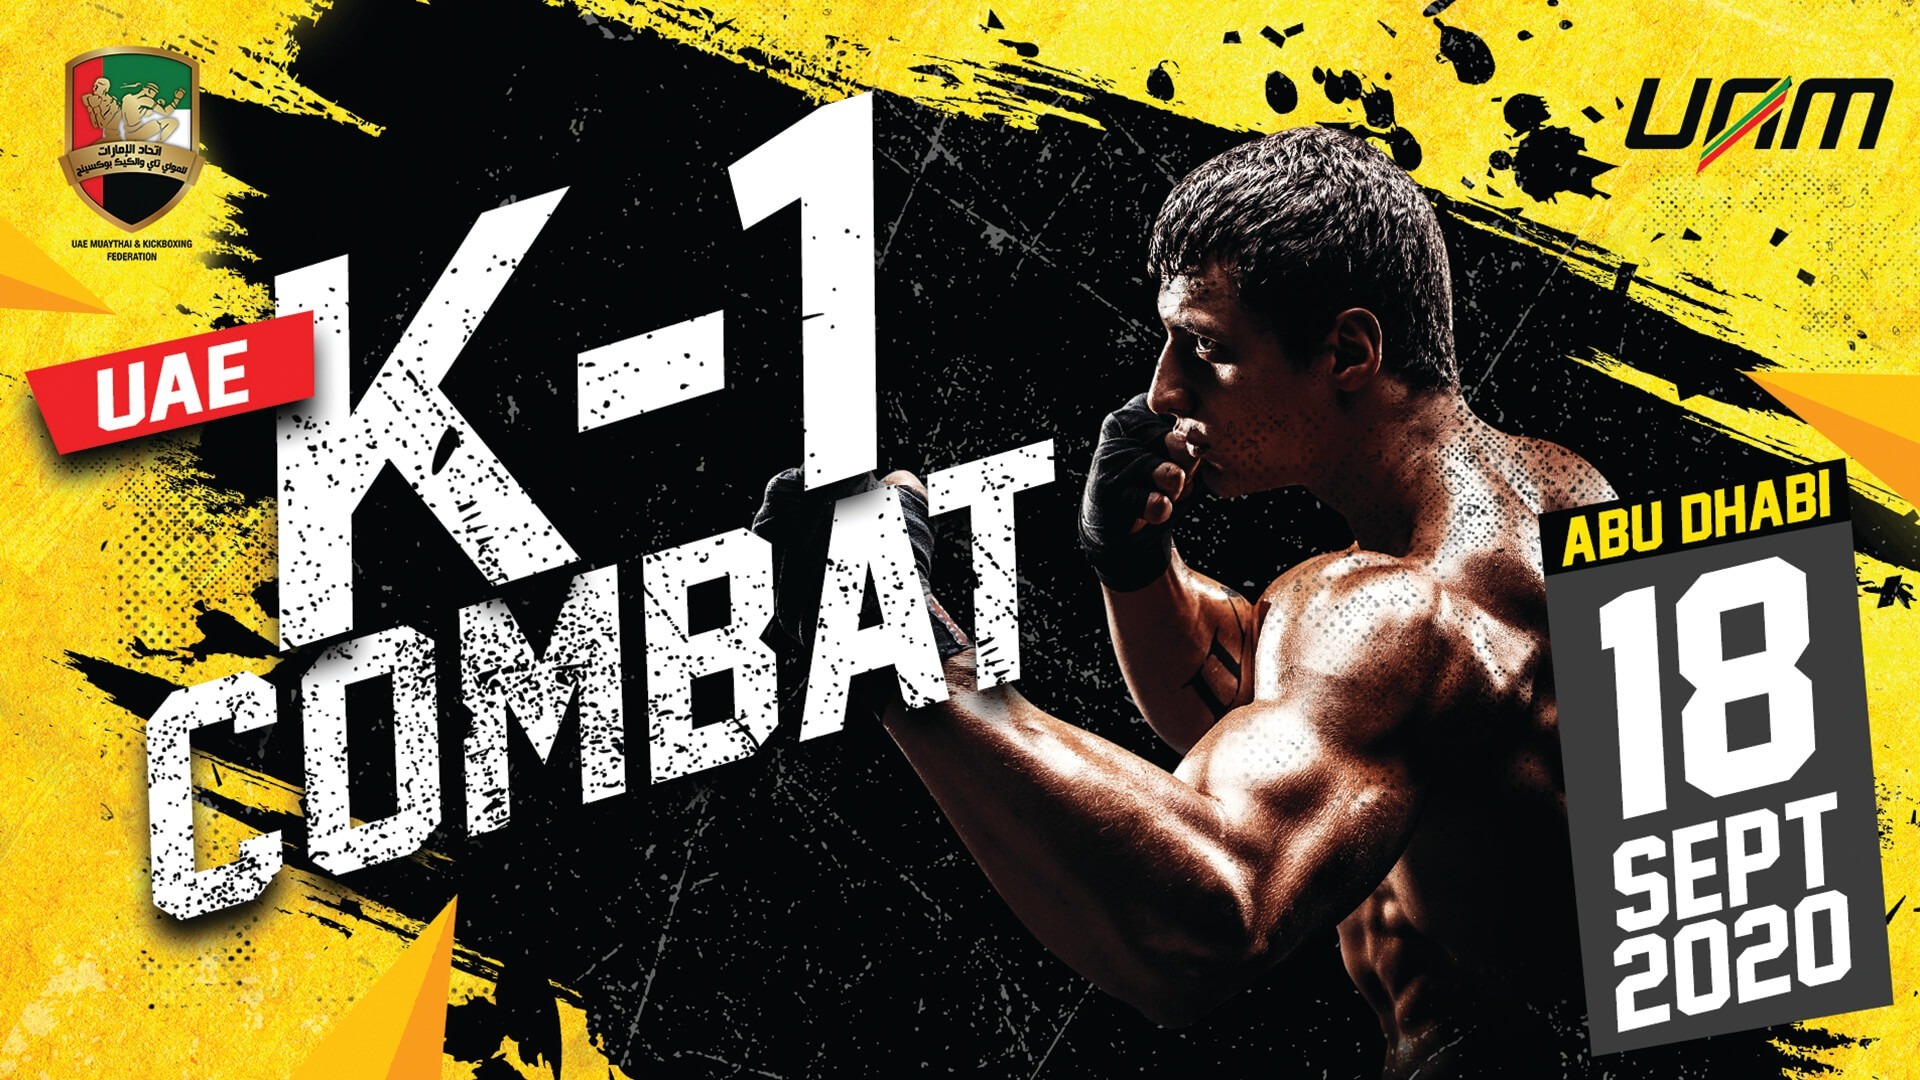 UAE K-1 Combat Kickboxing Championship - Coming Soon in UAE